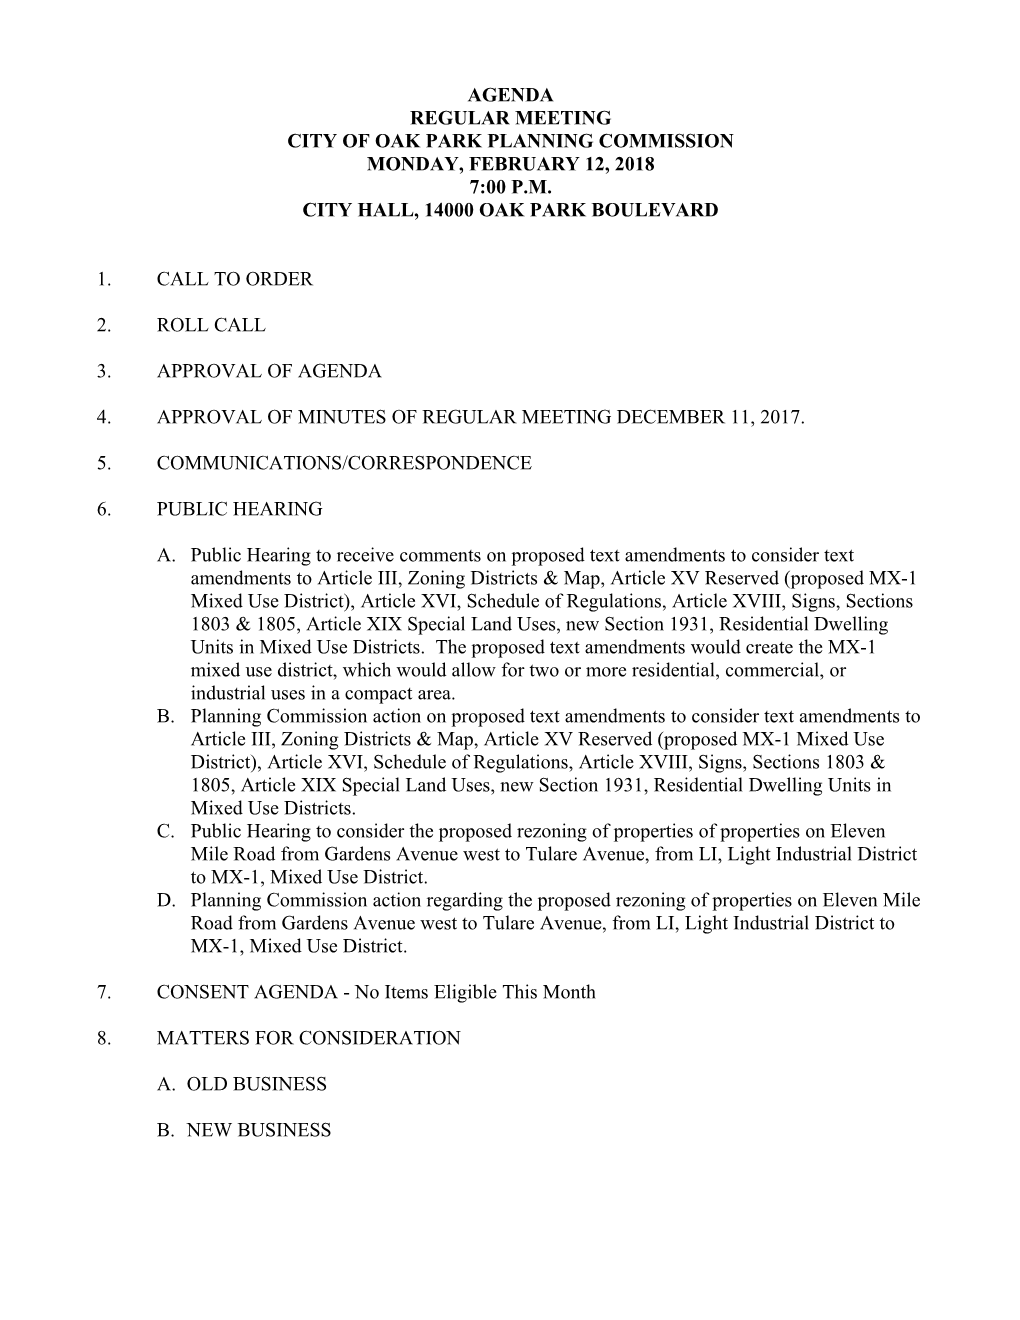 City of Oak Park, Planning Commission Agenda Page 2